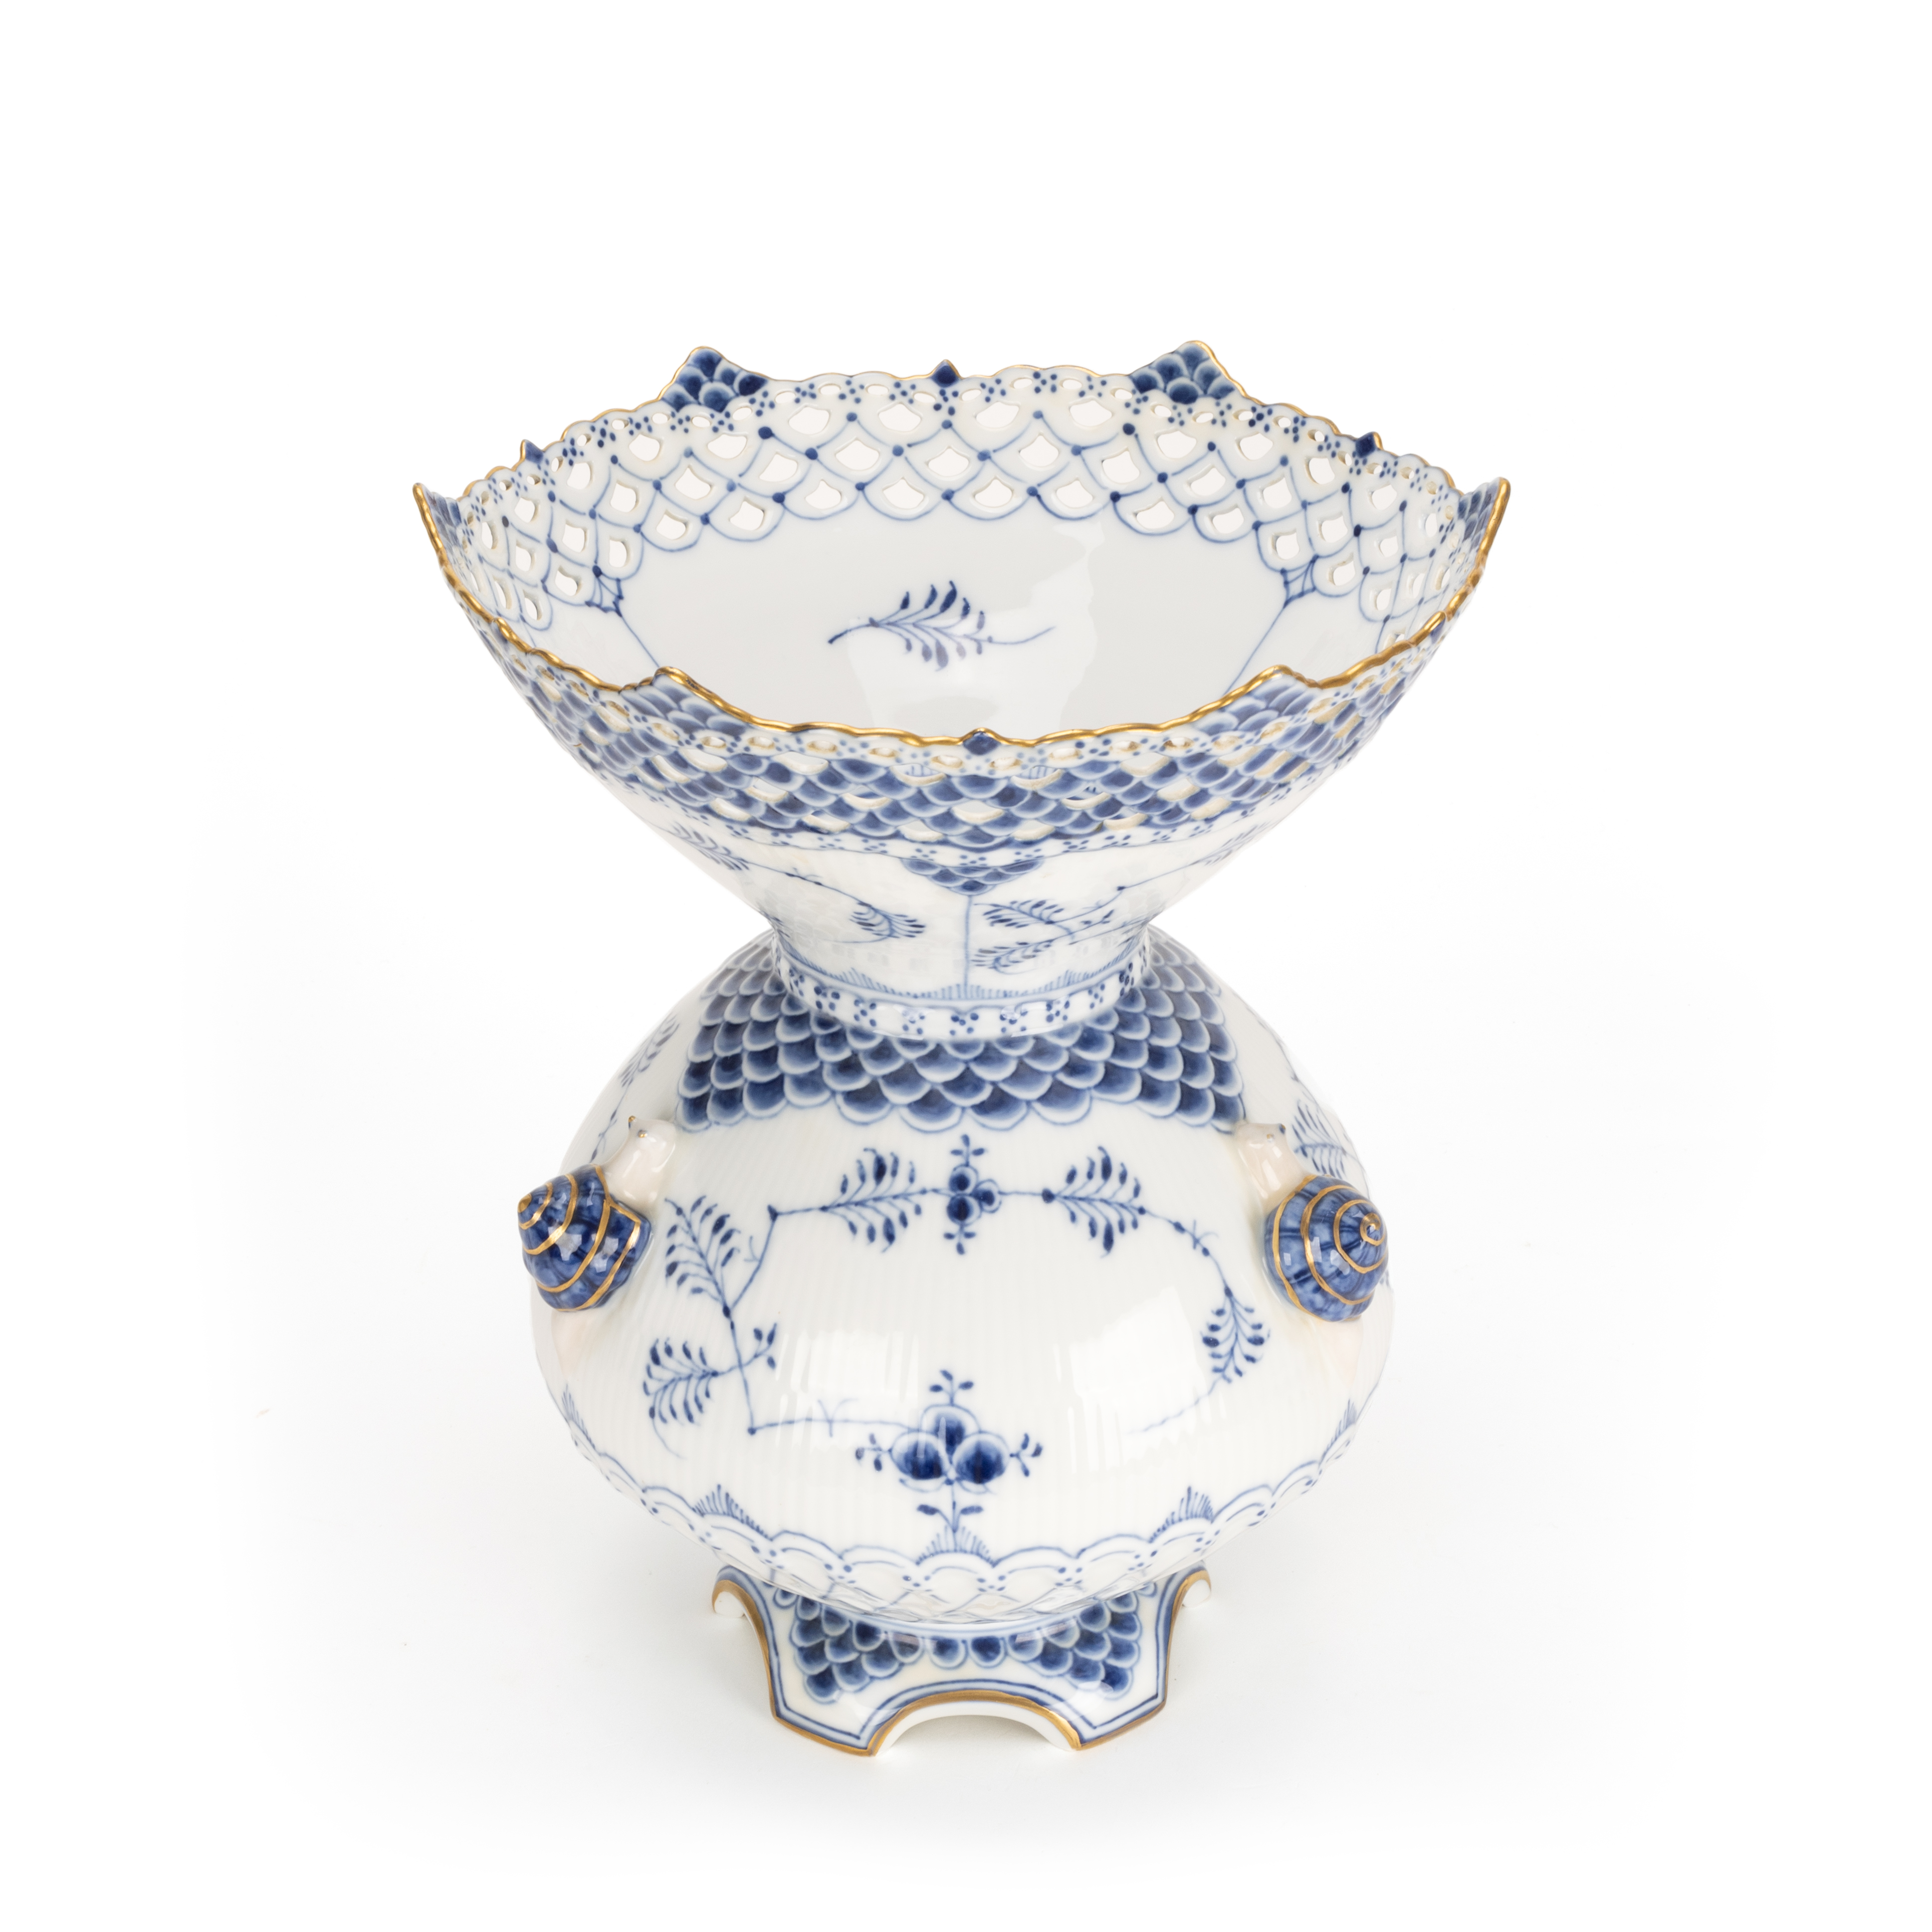 Royal Copenhagen große Vase 'Musselmalet' mit Schnecken - Image 3 of 4